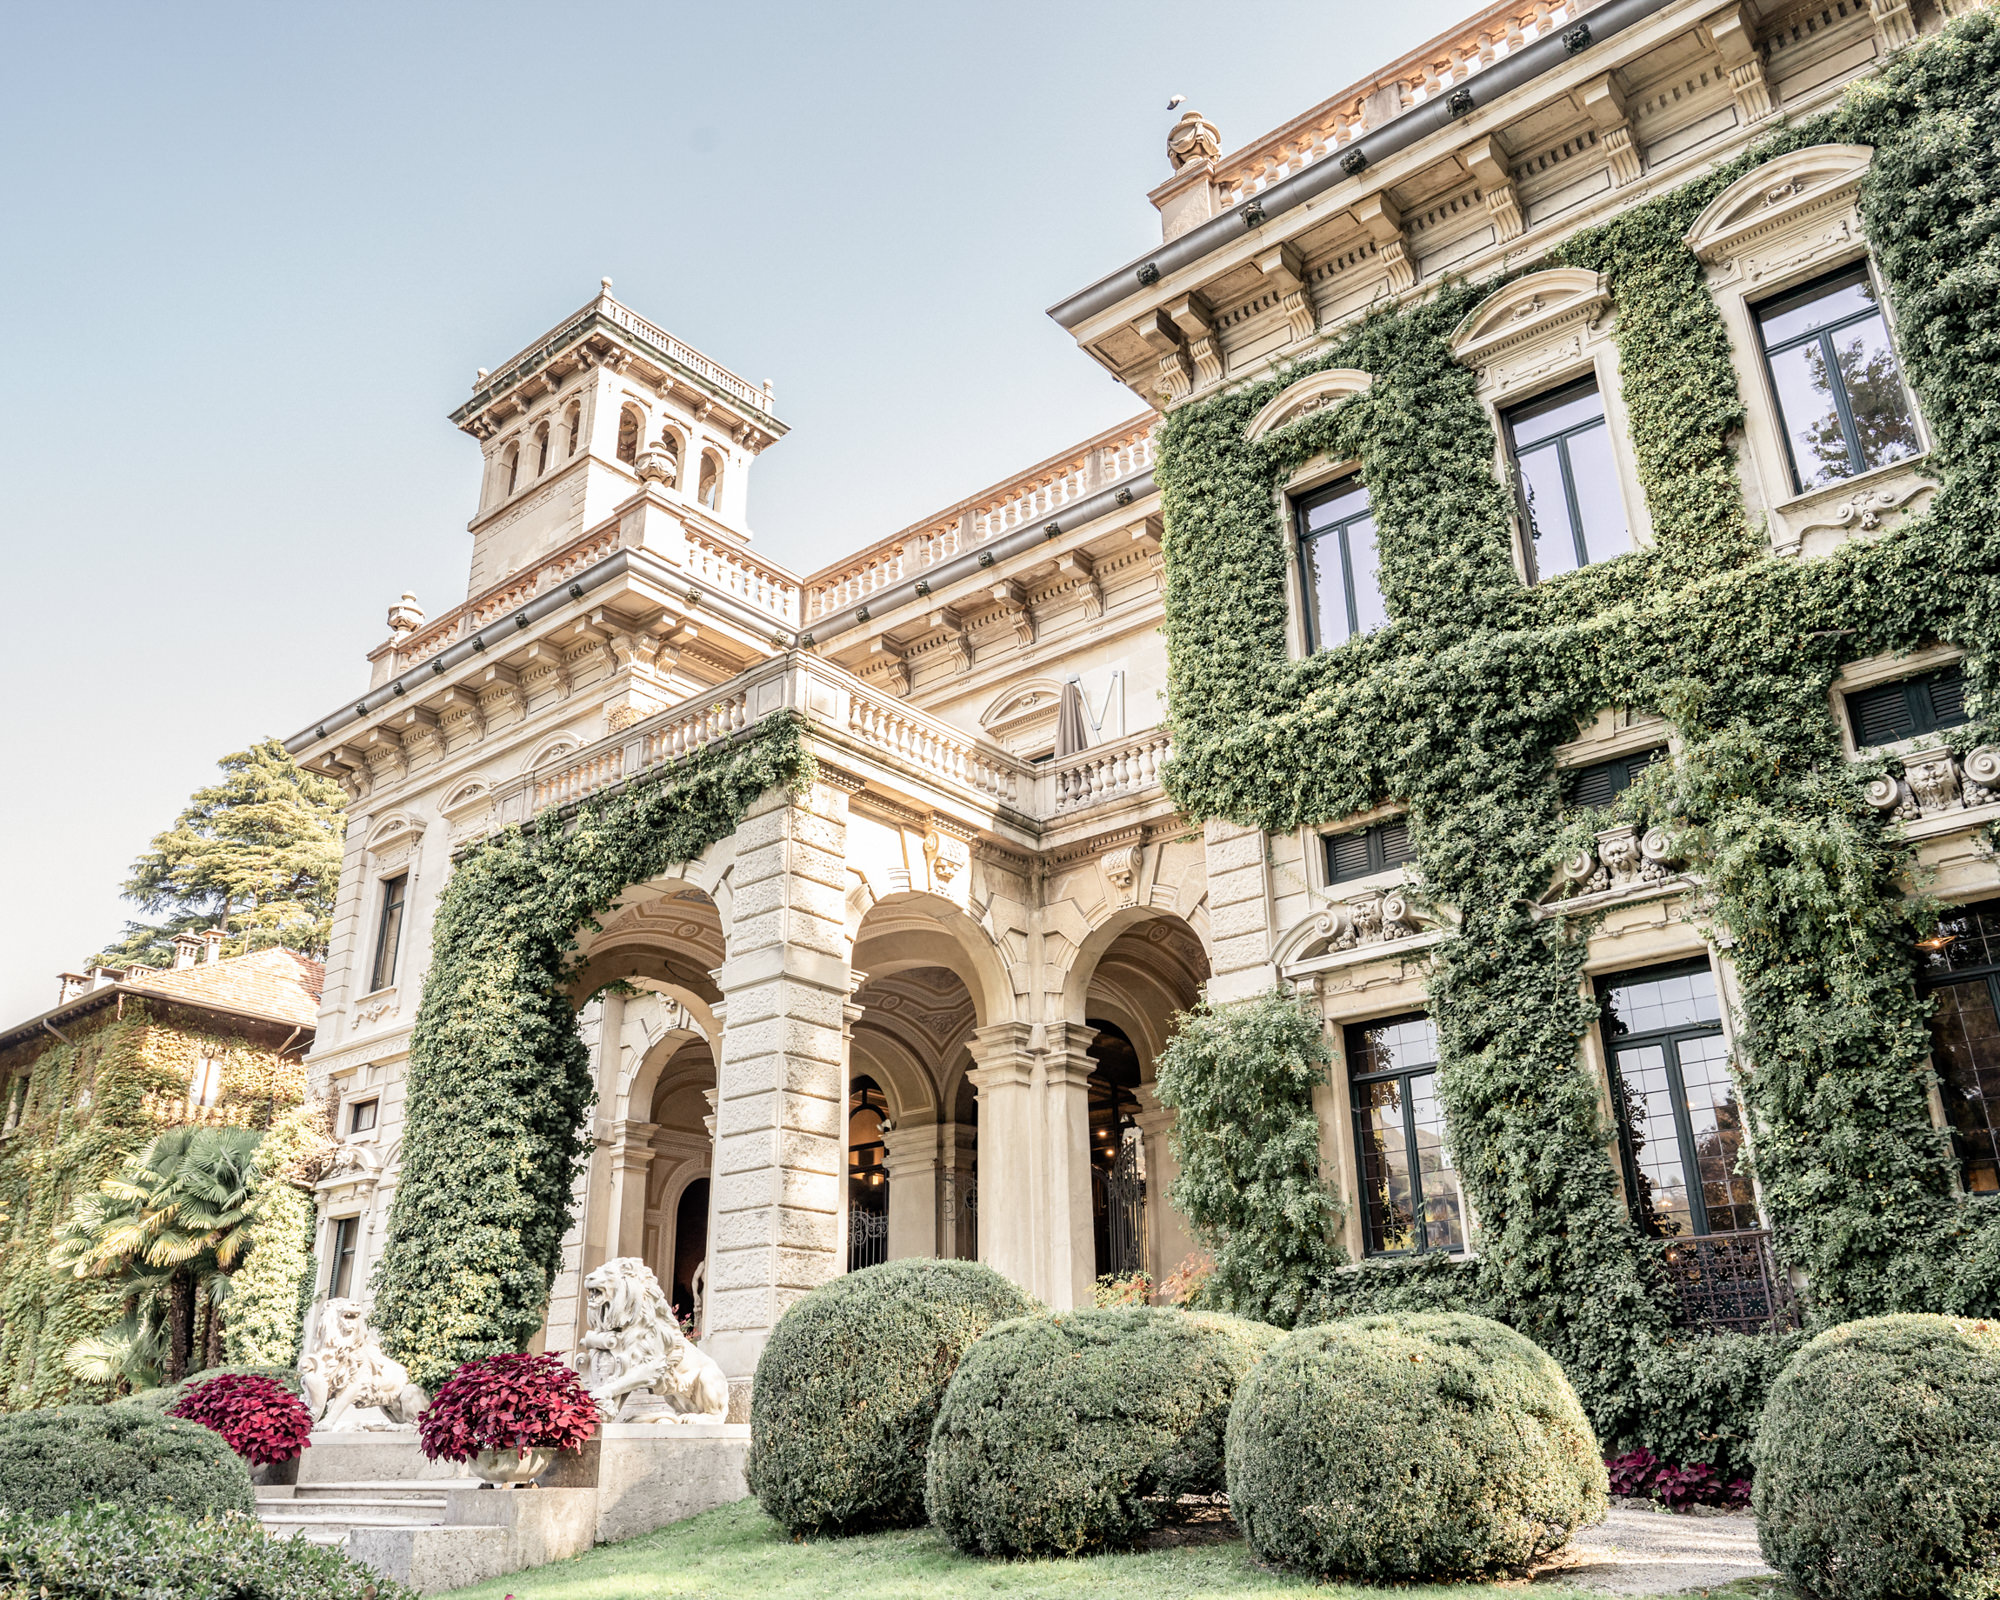 The front facade of Villa Erba wedding venue on Lake Como in Italy